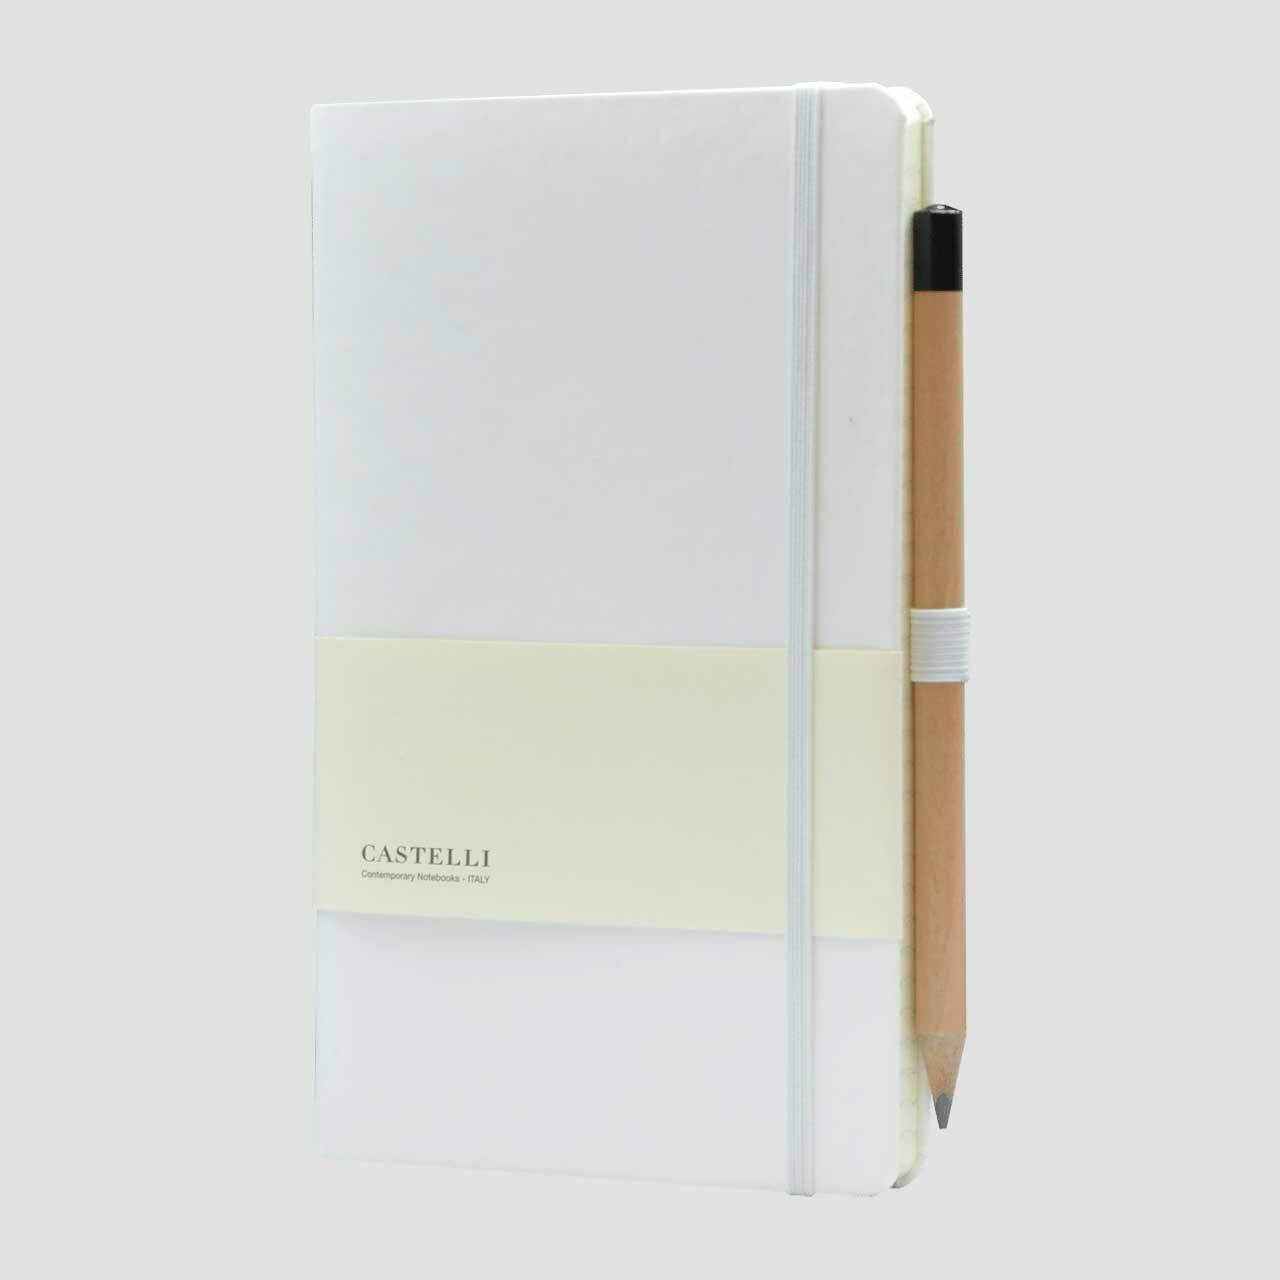 Castelli notitieboek soft touch met banderol en potlood met houder, wit